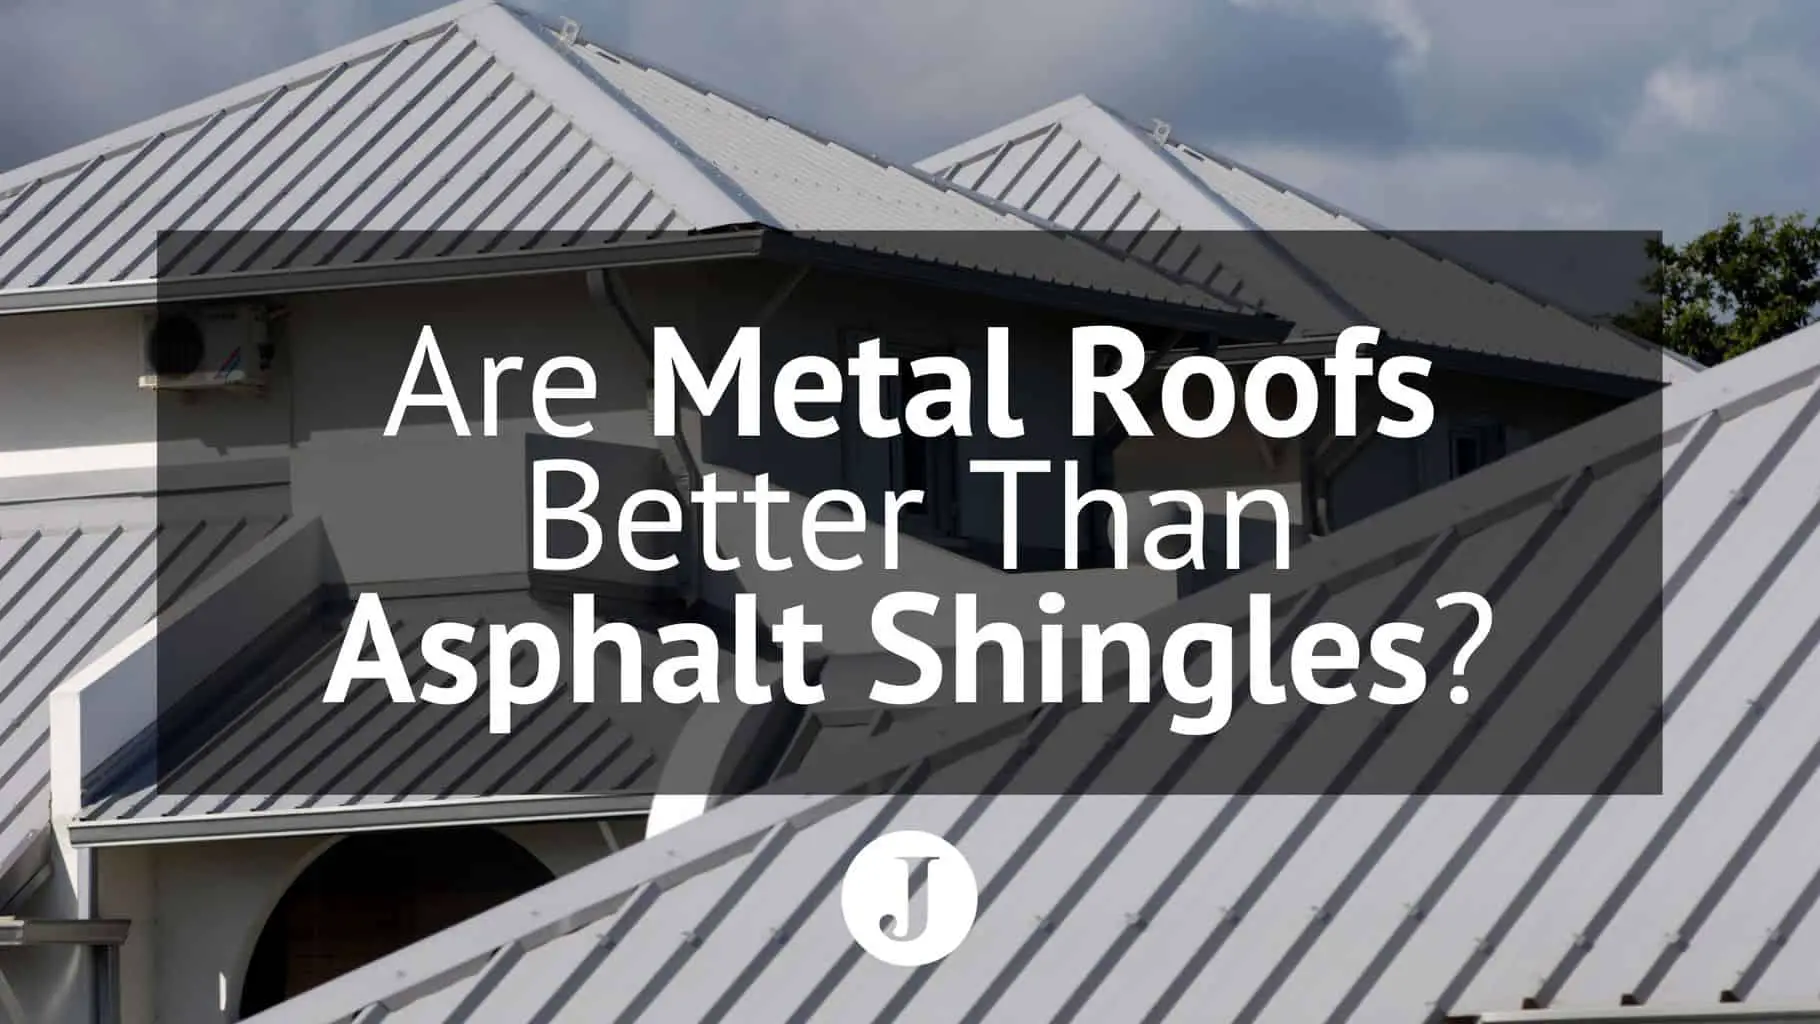 Are Metal Roofs Better Than Asphalt Shingles?